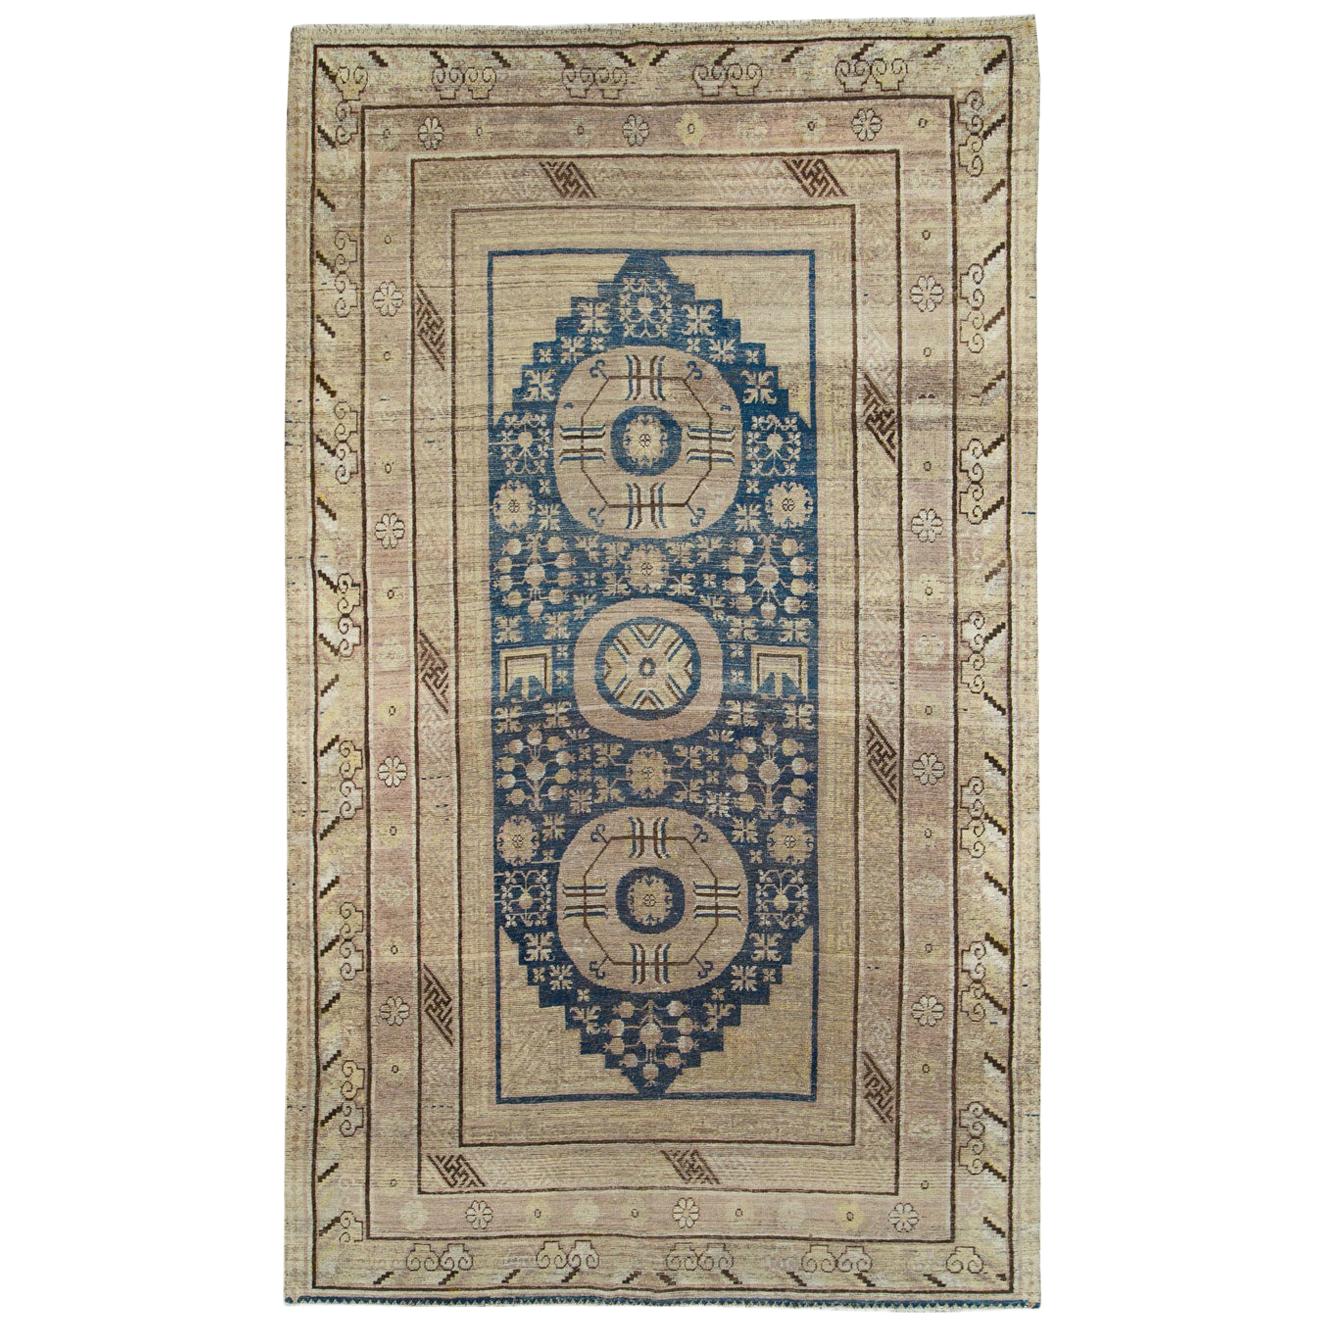 Late 19th Century Handmade East Turkestan Khotan Gallery Carpet